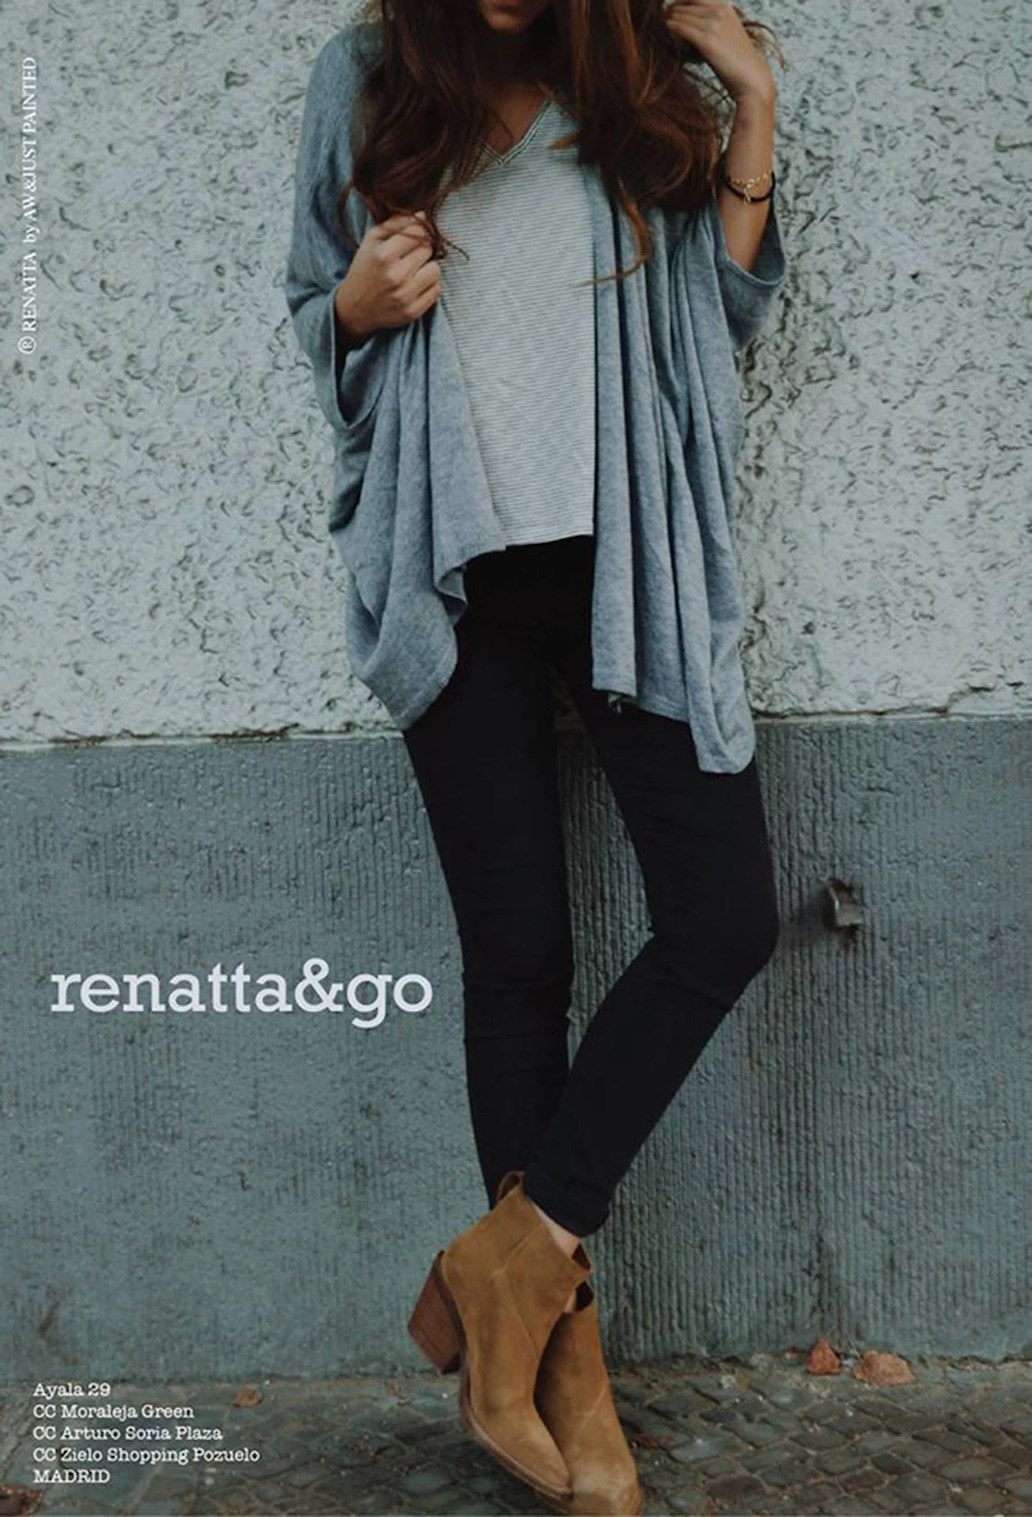 Renatta and go